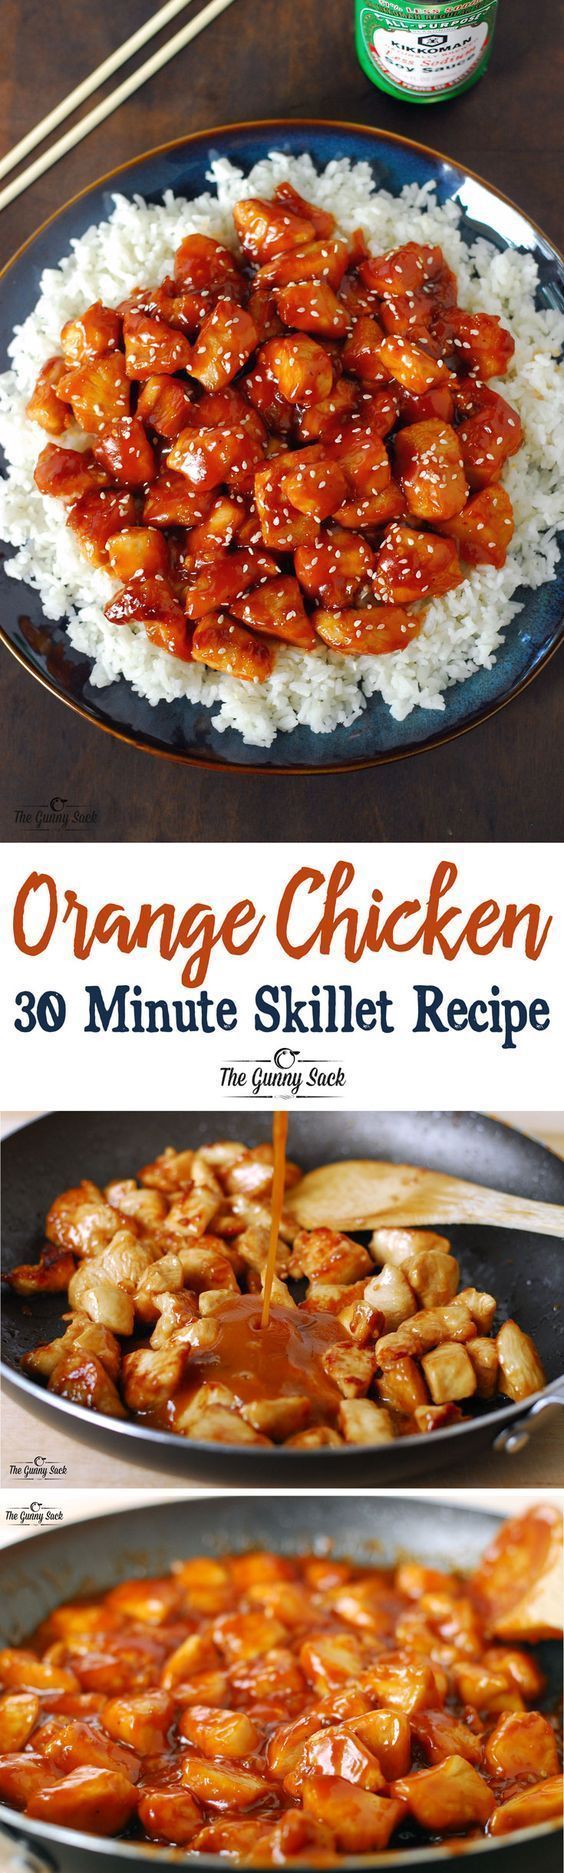 Orange Chicken 30 Minute Skillet Recipe: A easy dinner idea that is family friendl